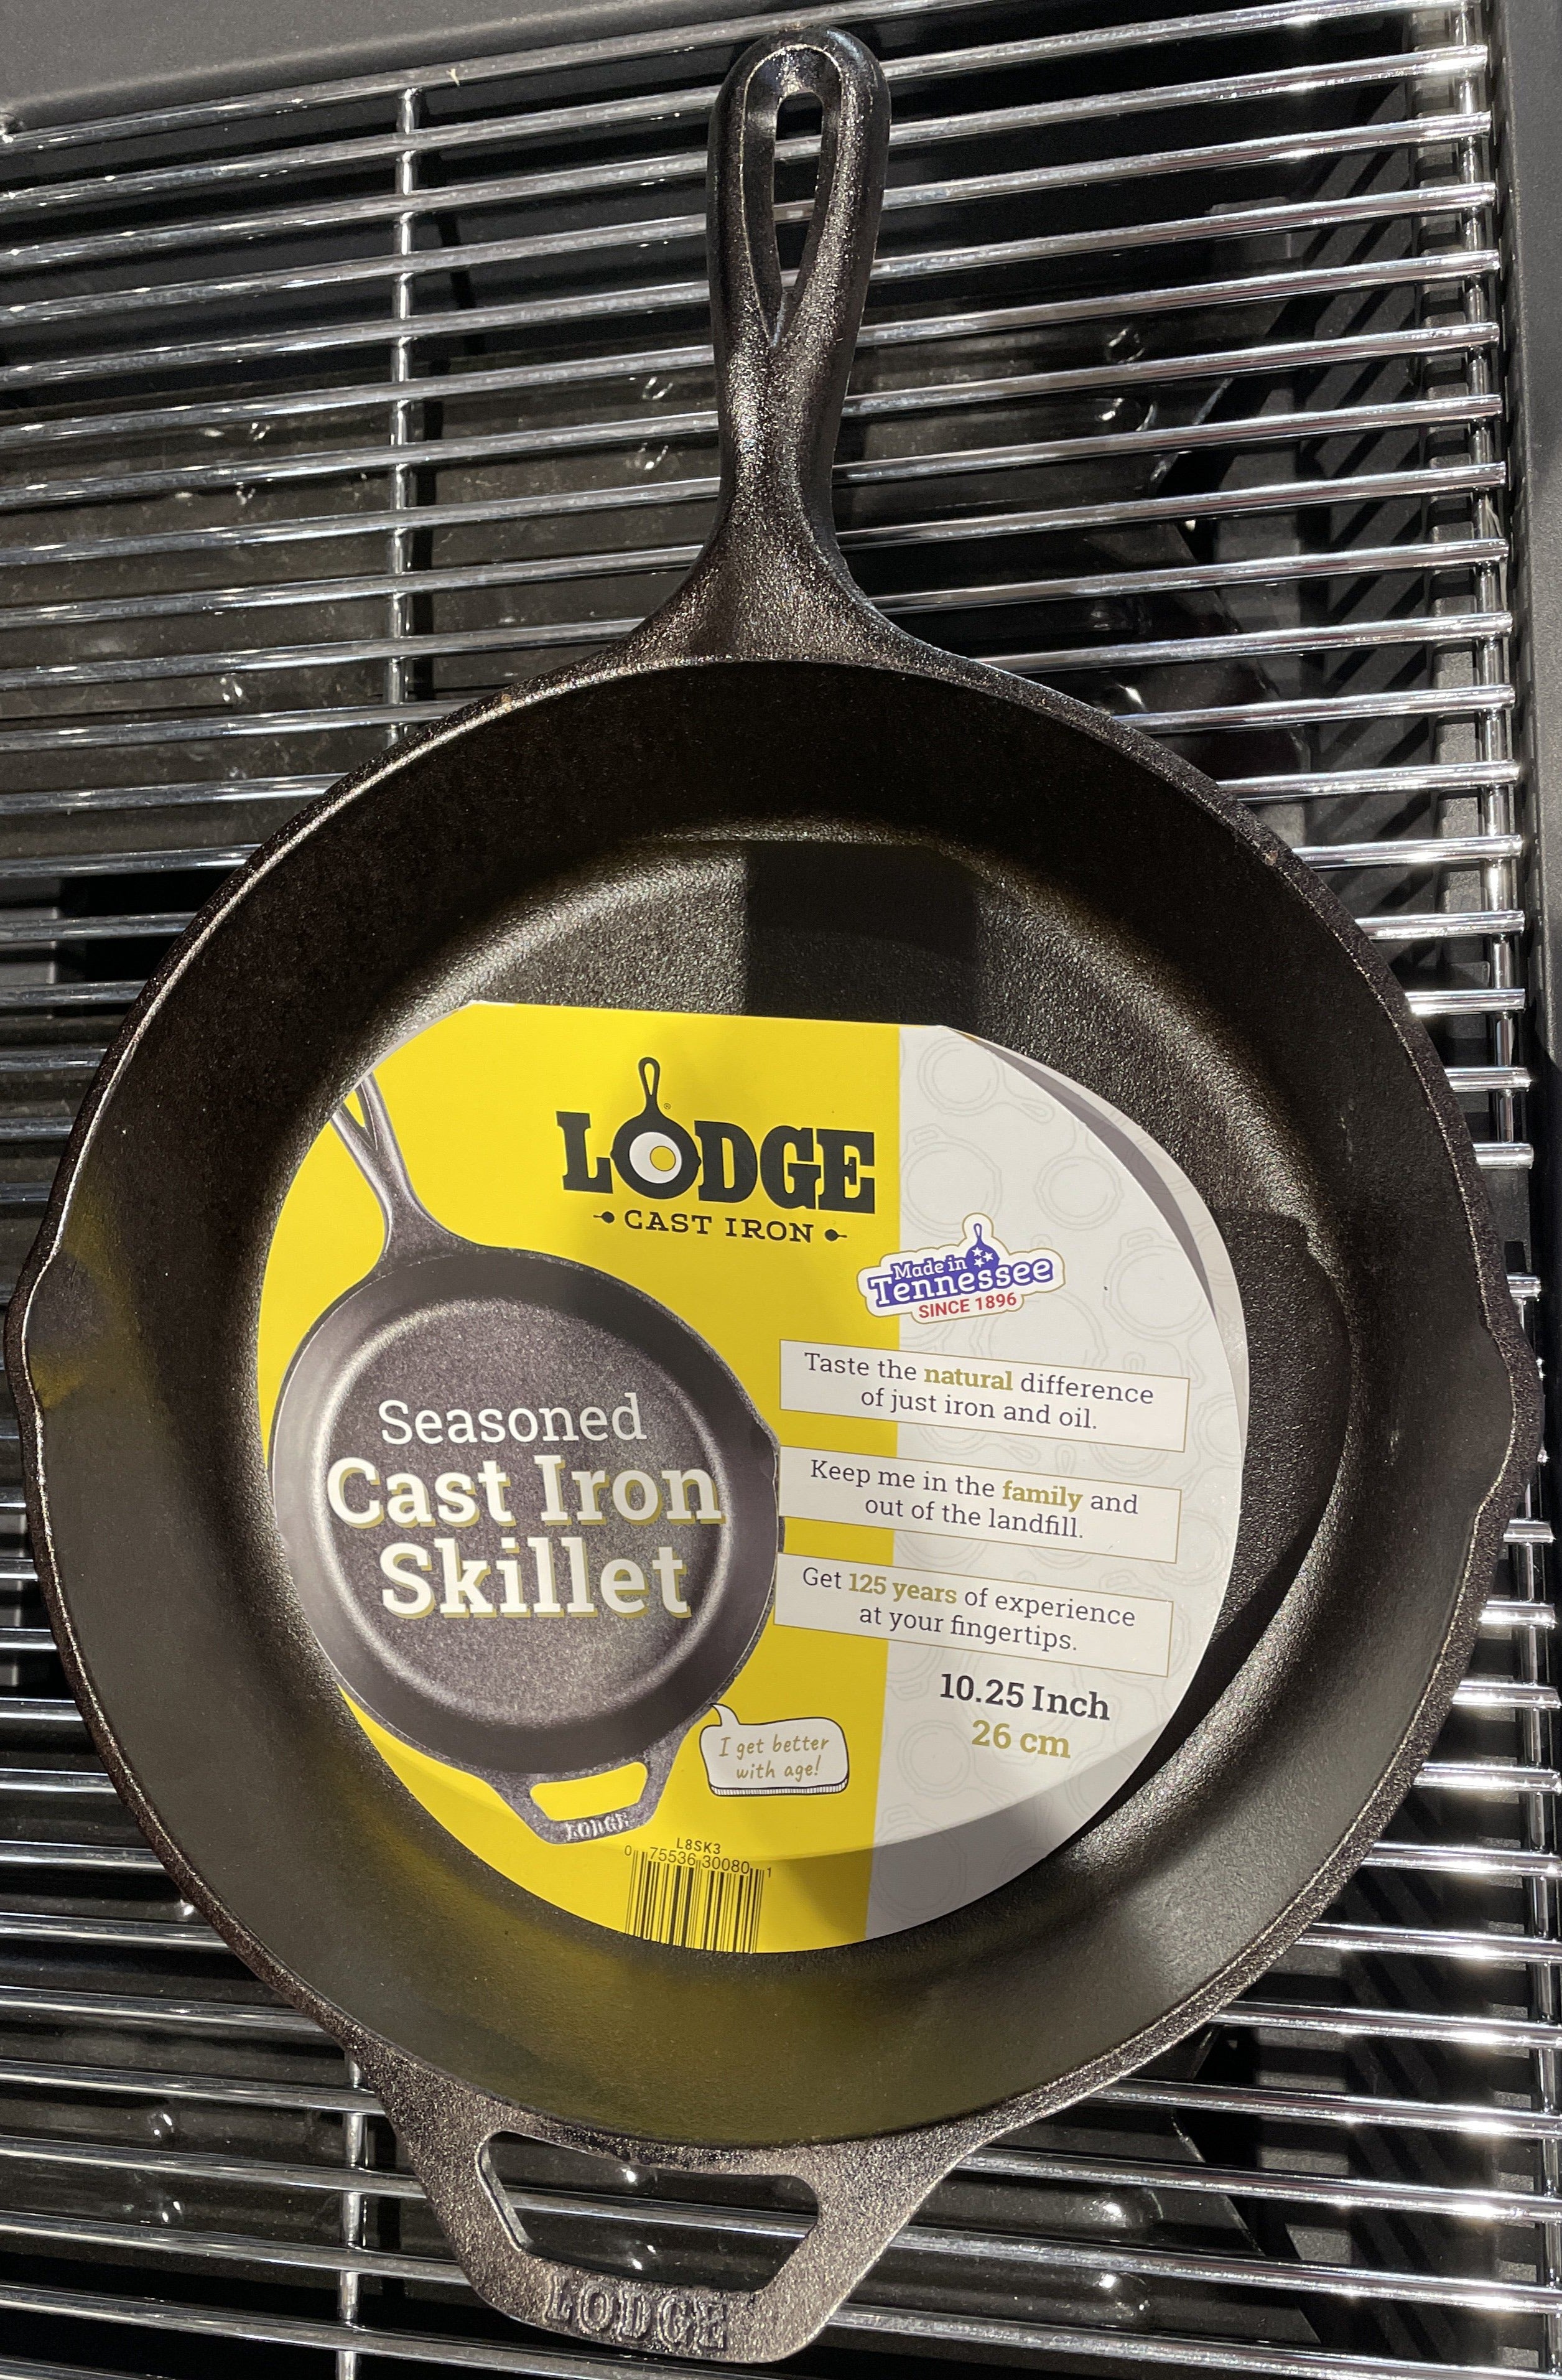 Lodge L8DSK3 10 1/4 Pre-Seasoned Cast Iron Deep Skillet